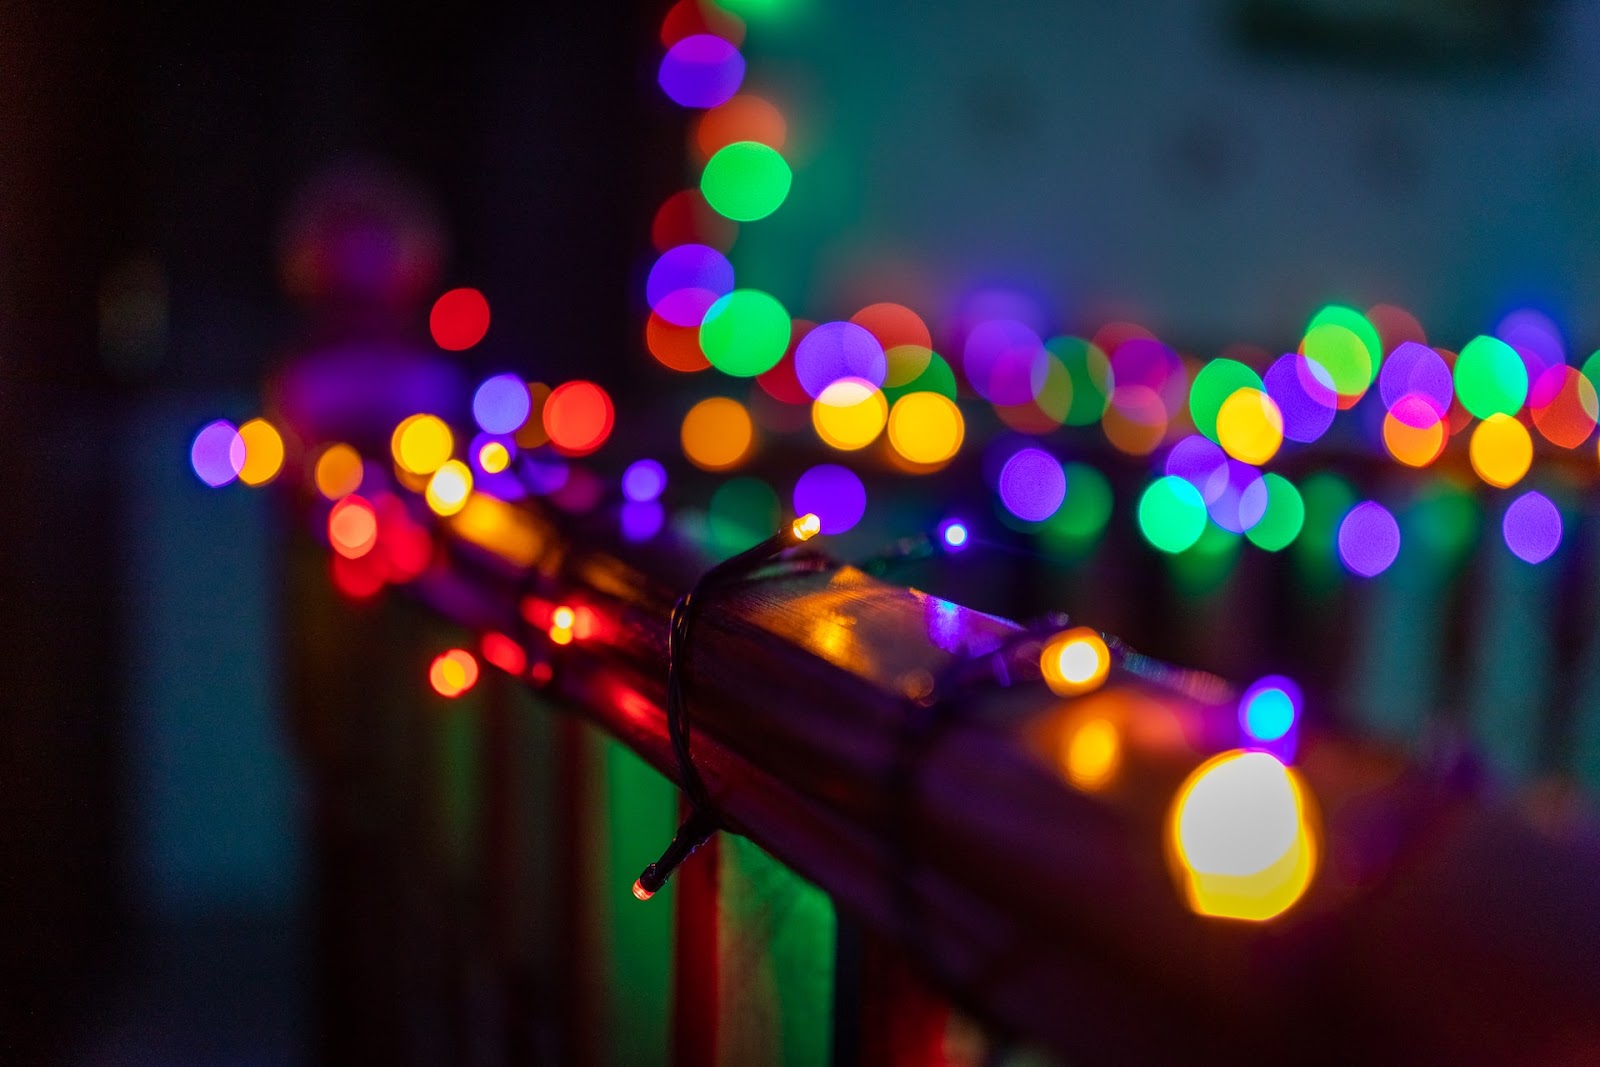 Colorful LED lighting on a railing